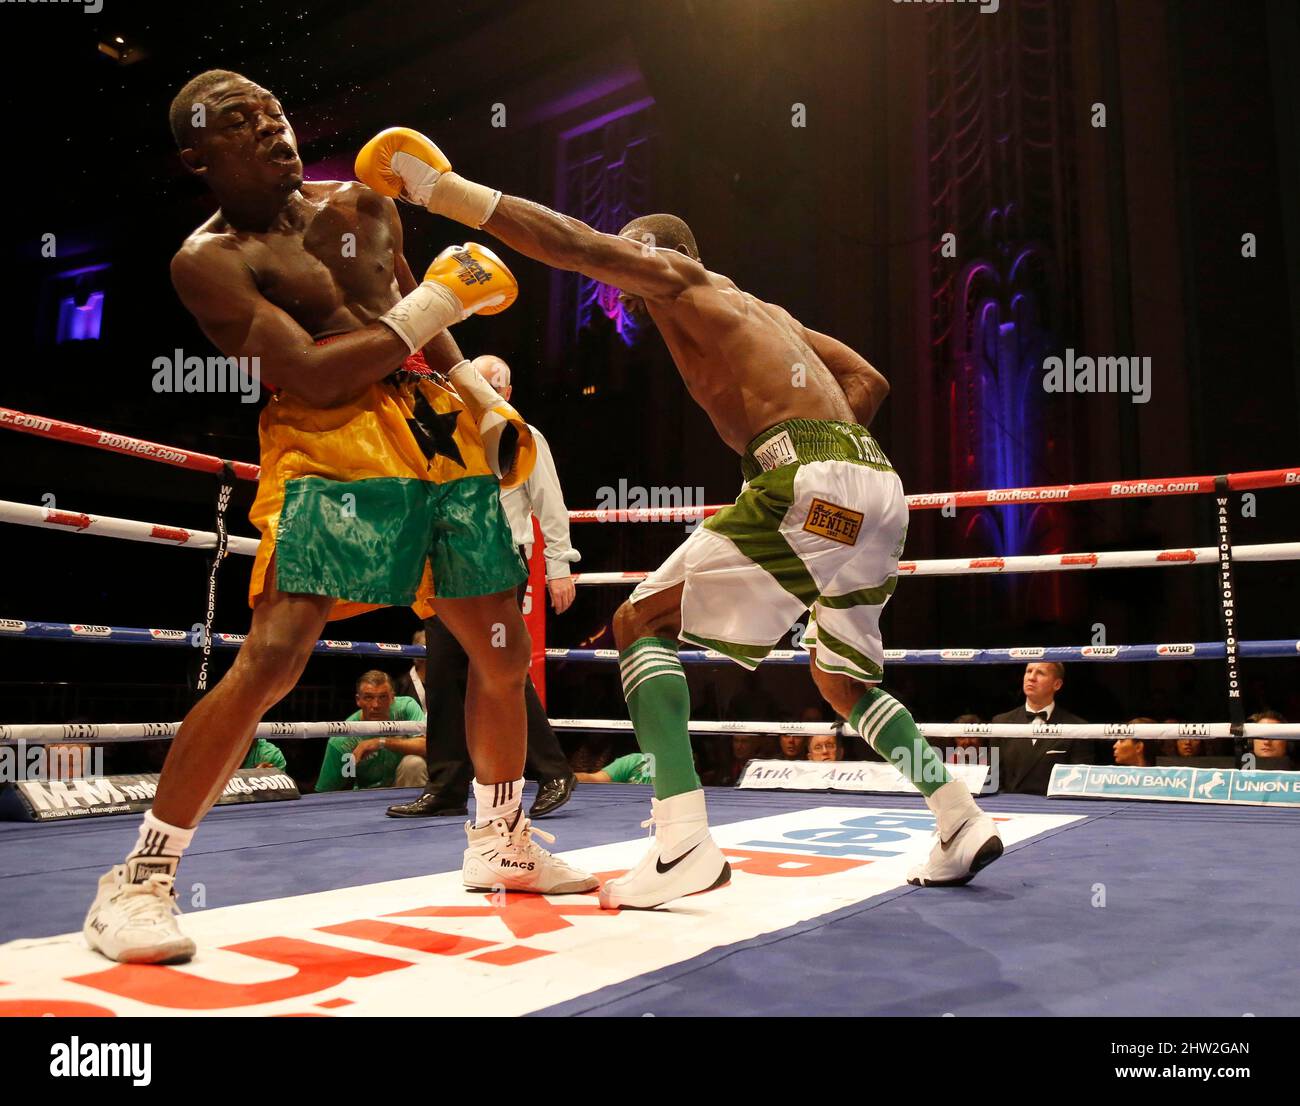 Larry Ekundayo (White Shorts) kämpft während der Show „Judgement Day“ im Troxy, Limehouse, London, gegen Joseph Lamptey um den Titel der African Boxing Union (ABU). 30. Oktober 2015. James Boardman / Telephoto Images +44 7967 642437 Stockfoto